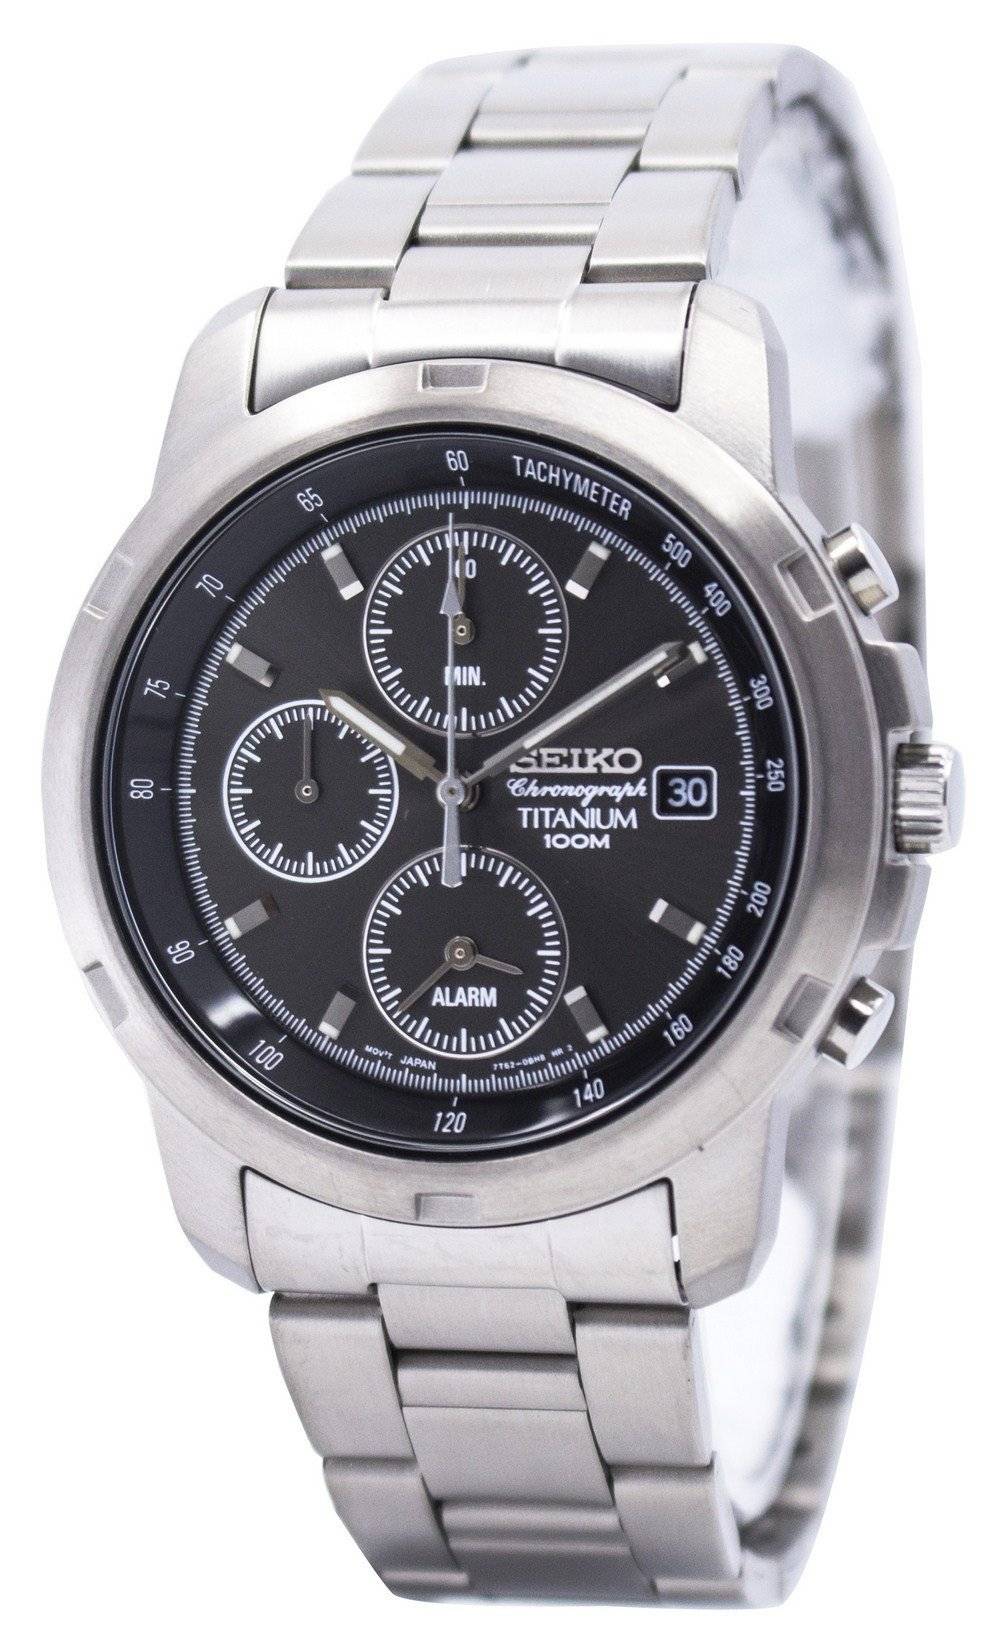 Đồng hồ đeo tay nam Seiko Titanium Chronograph SNA107 SNA107P1 SNA107P vi